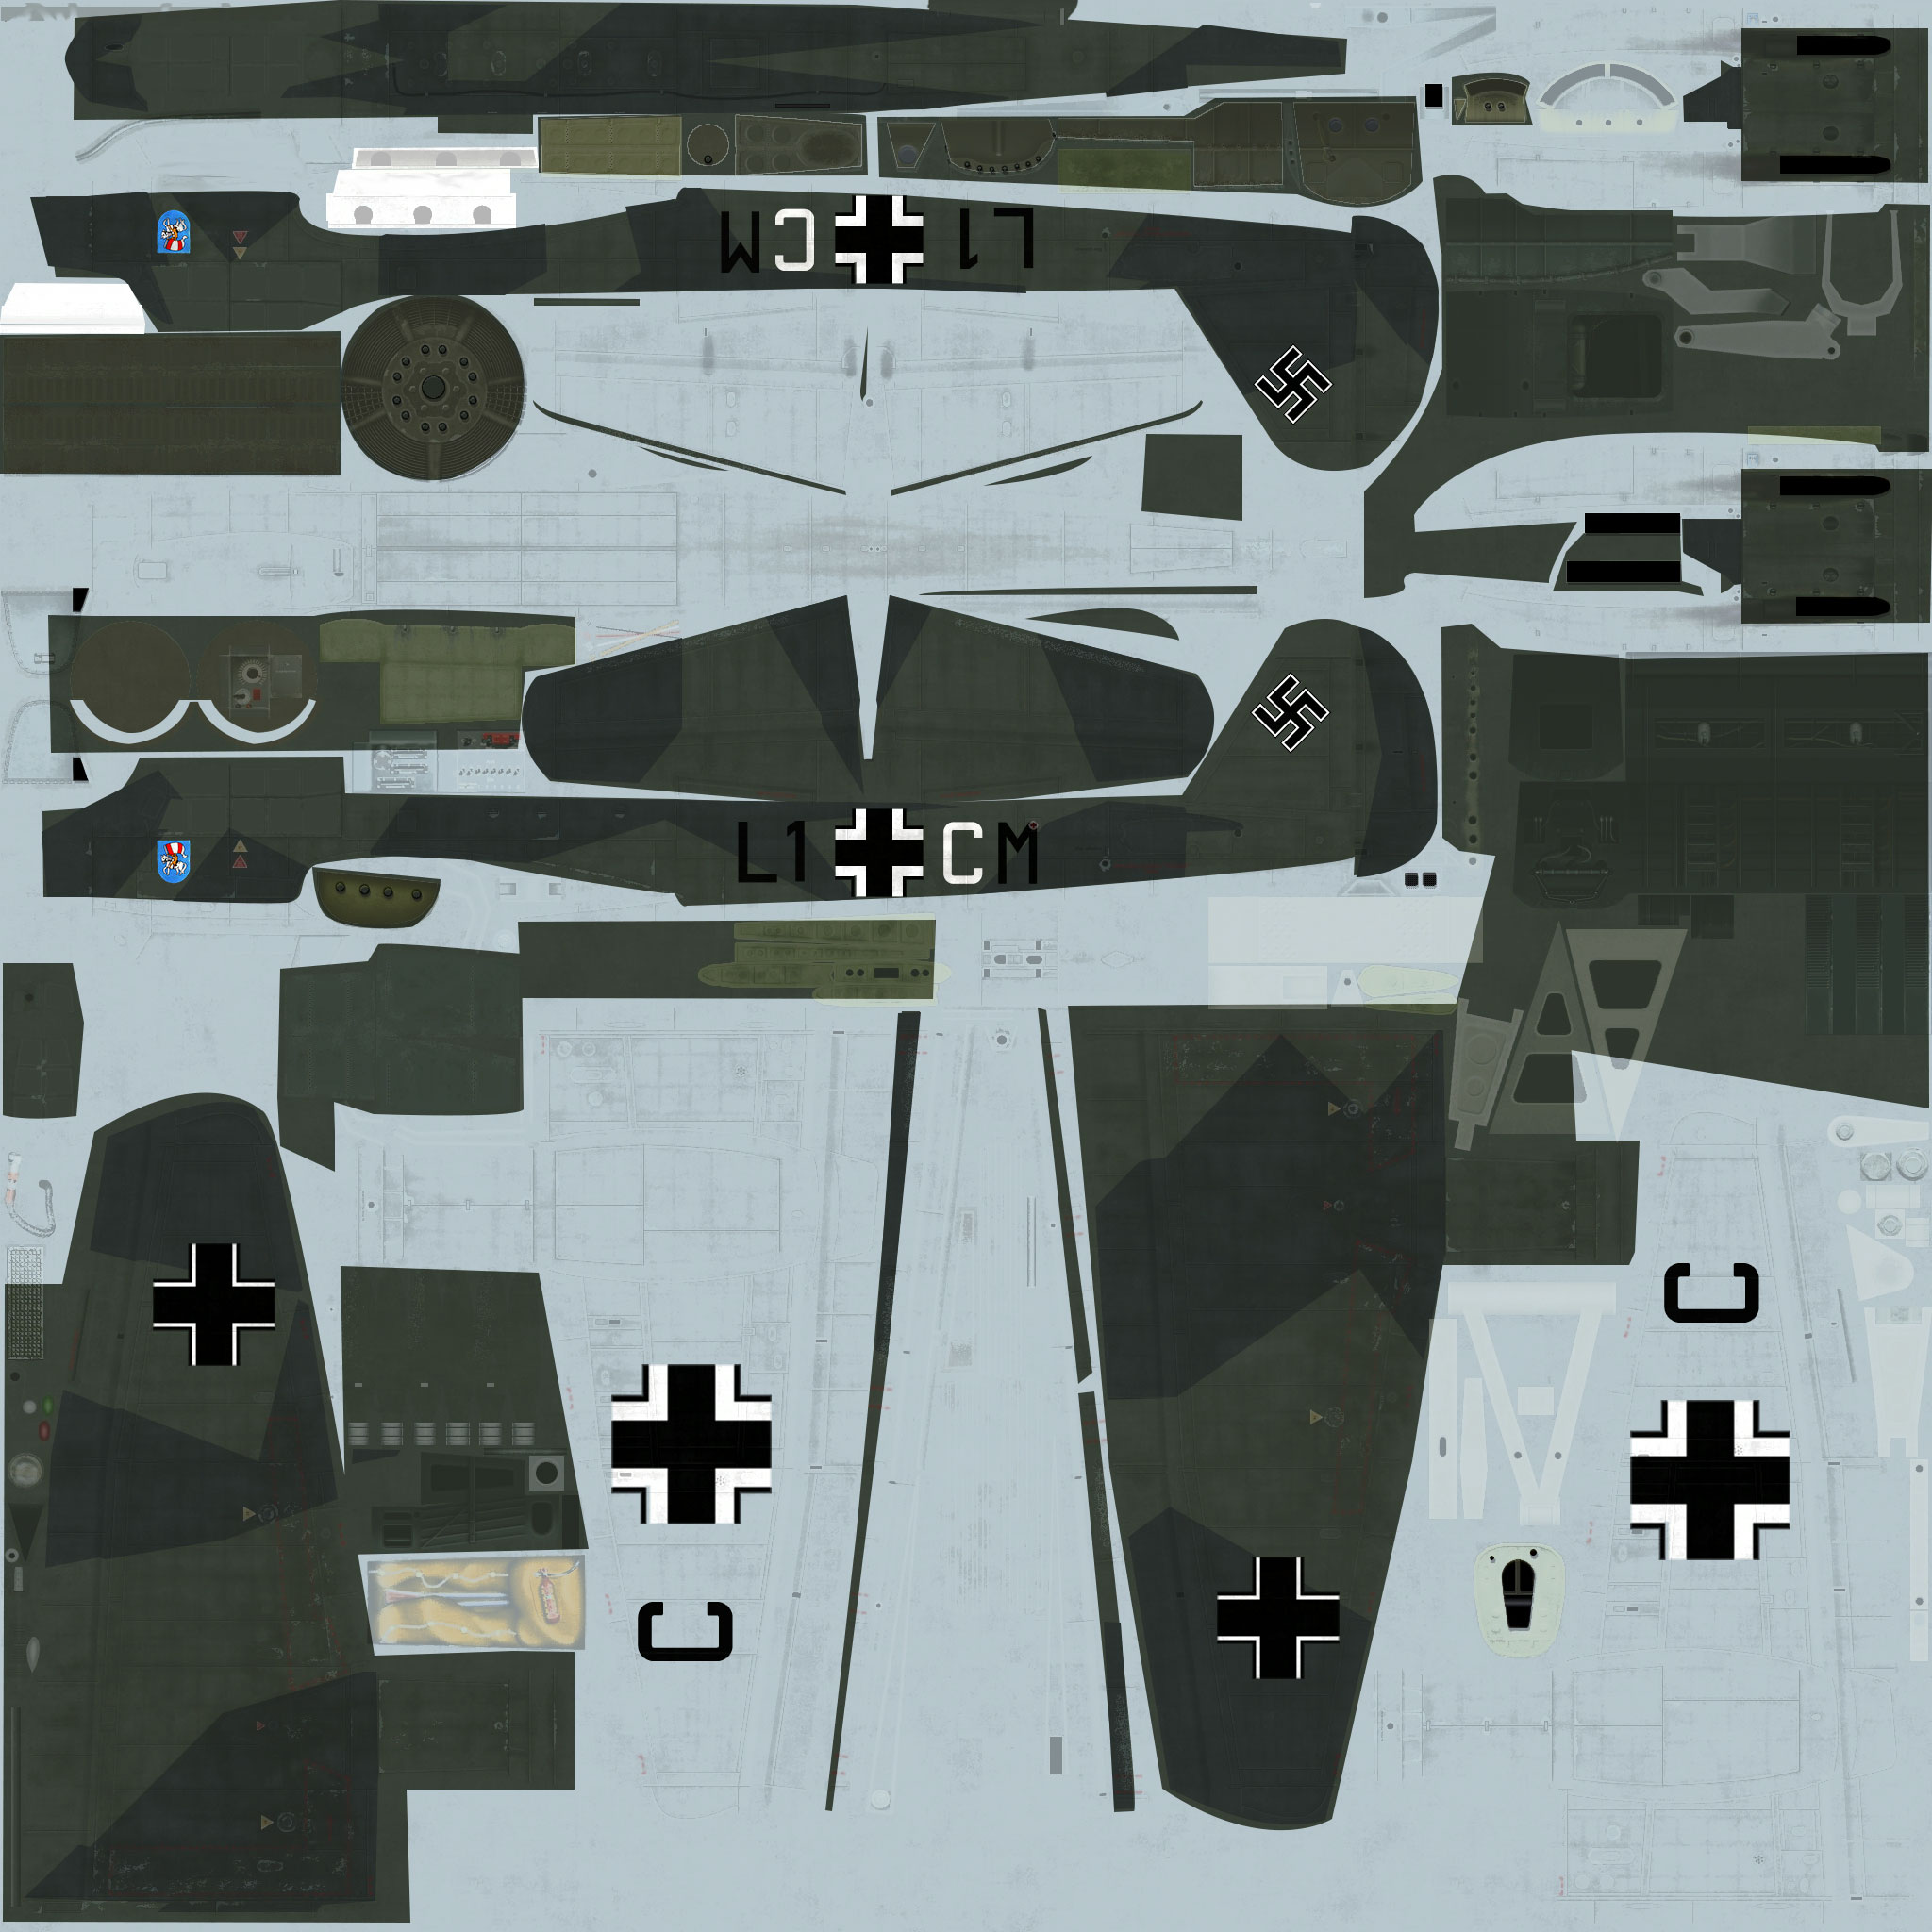 COD asisbiz Ju 88A 4.LG1 L1+CM France 1940